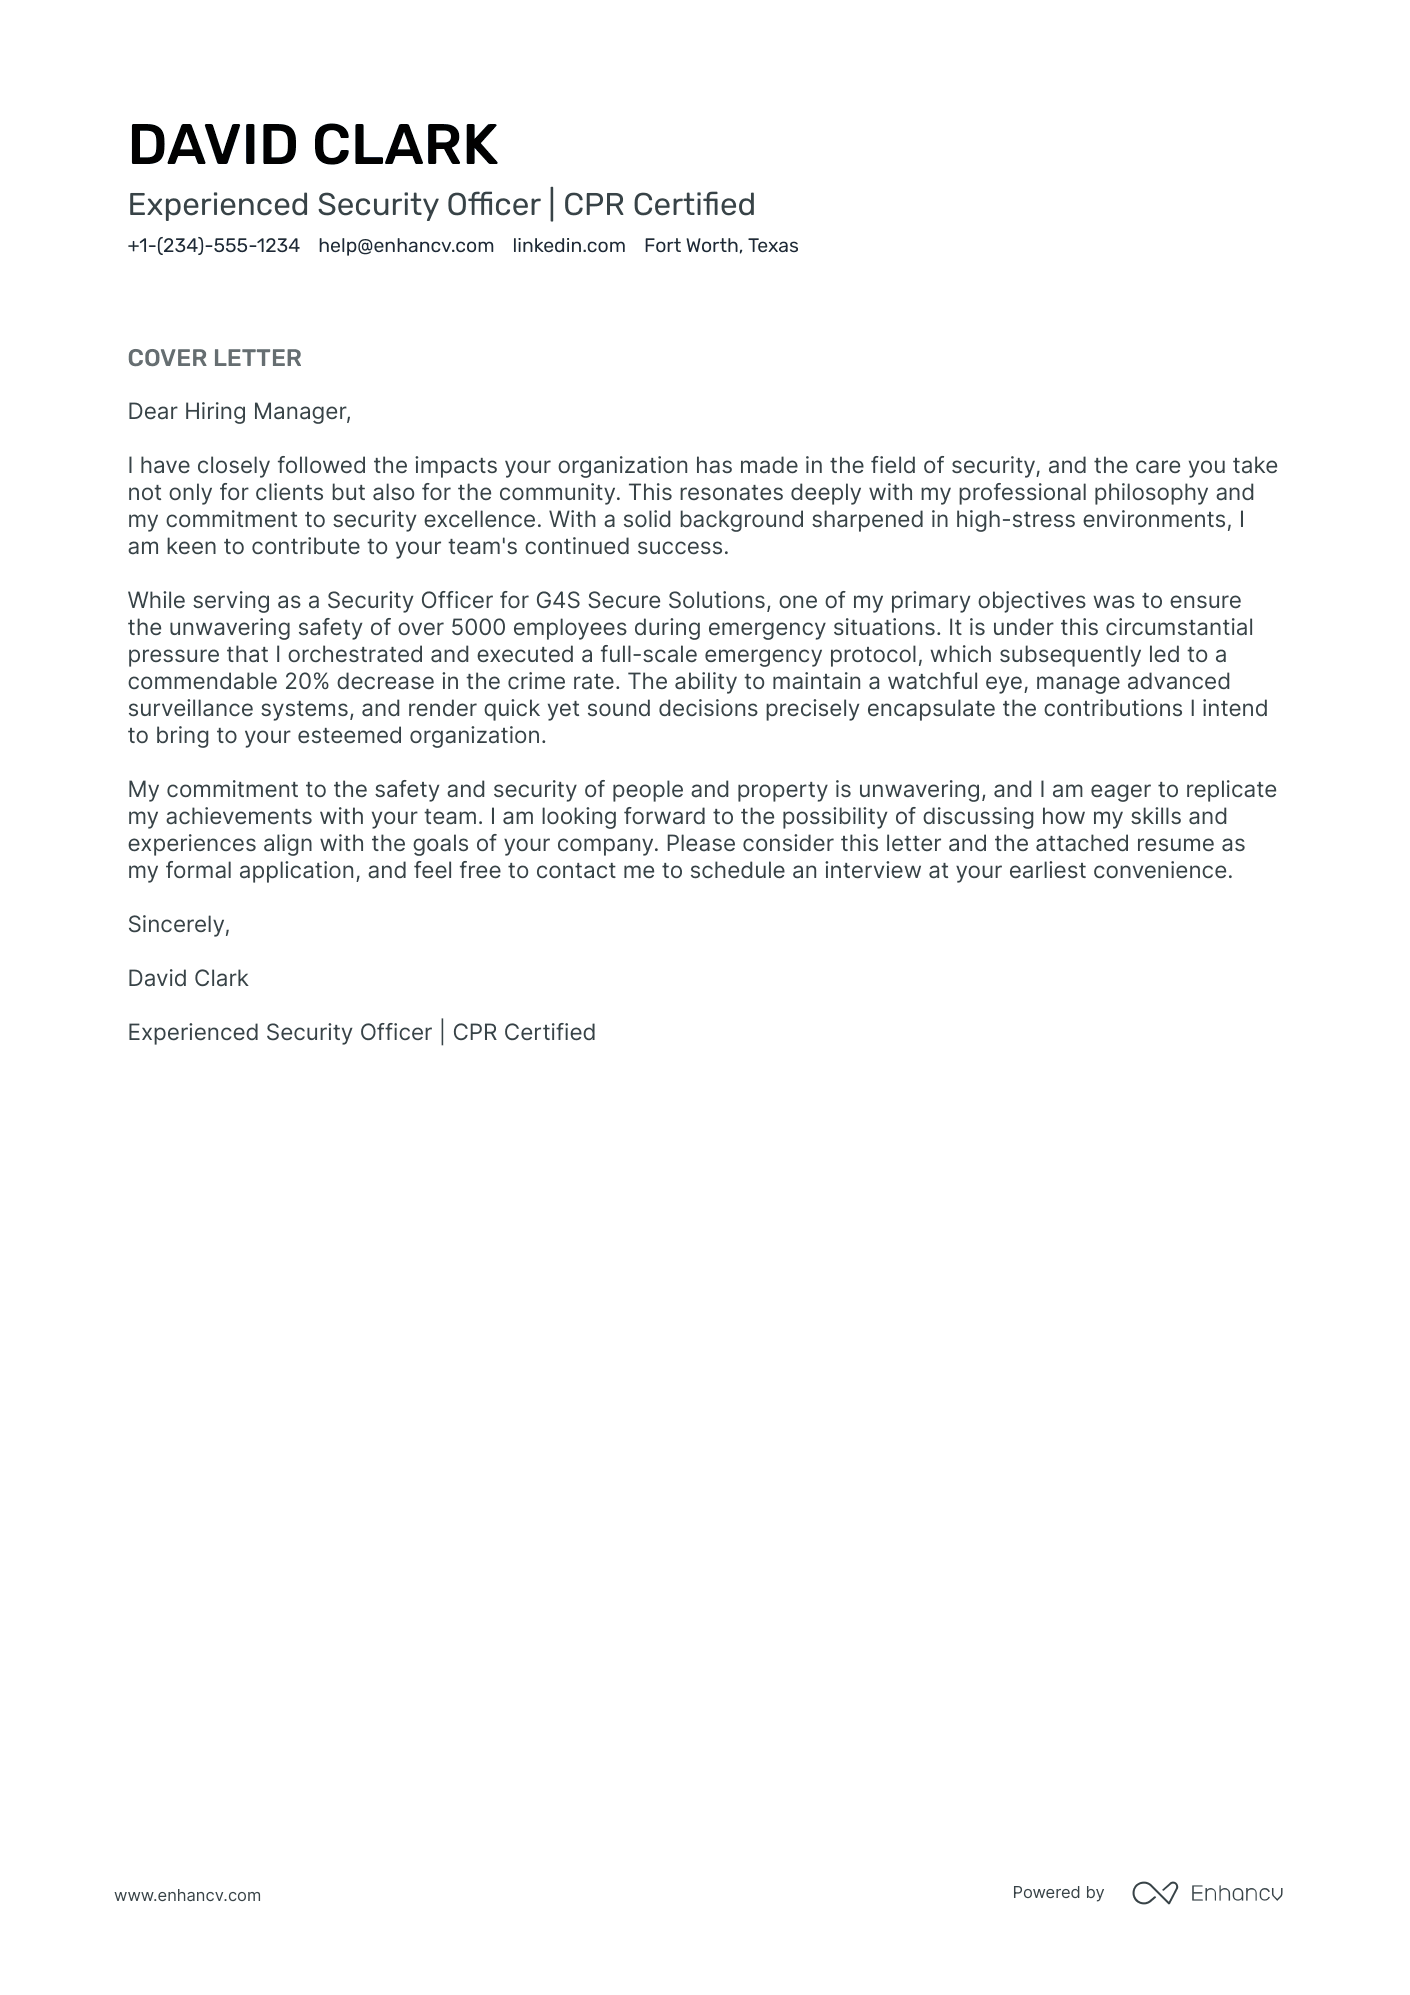 application letter for security officer pdf